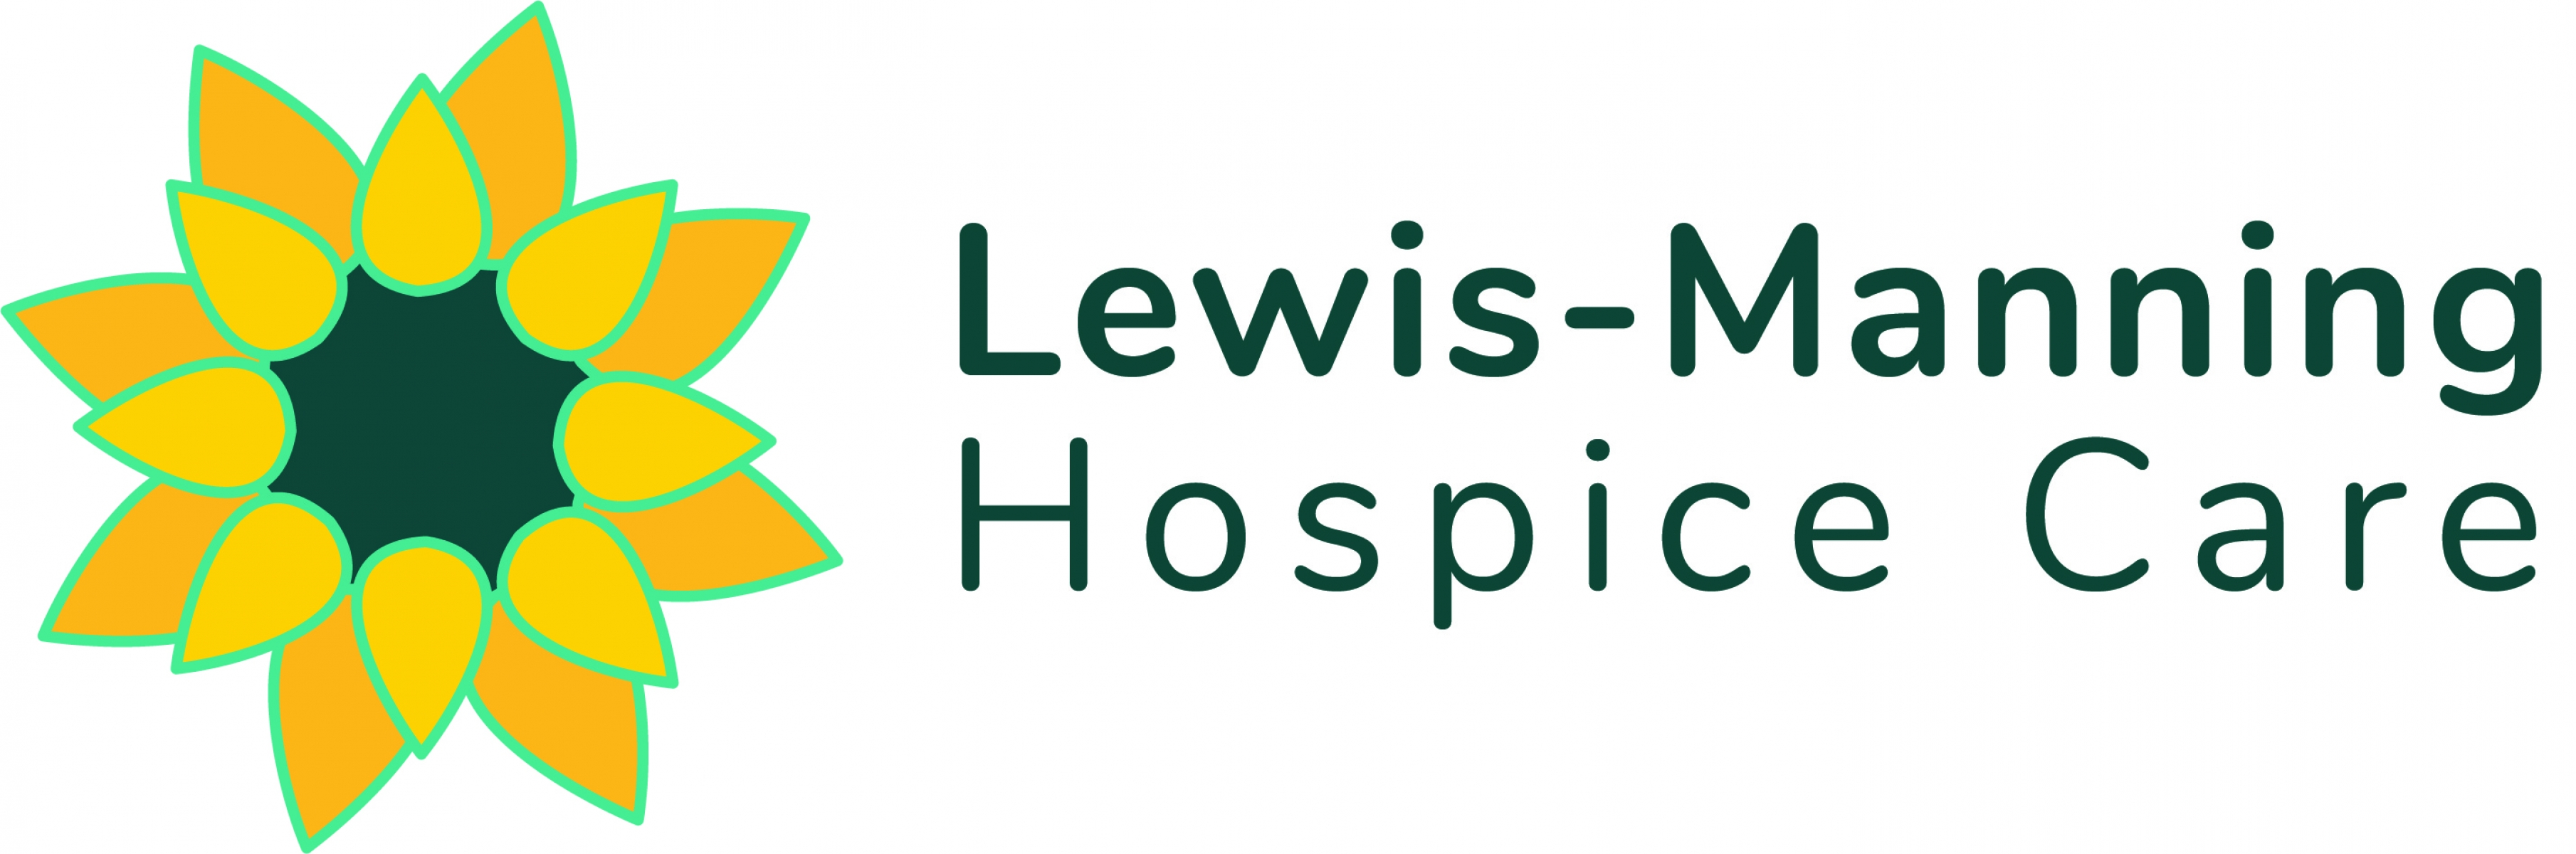 Lewis-Manning Hospice Care eCards